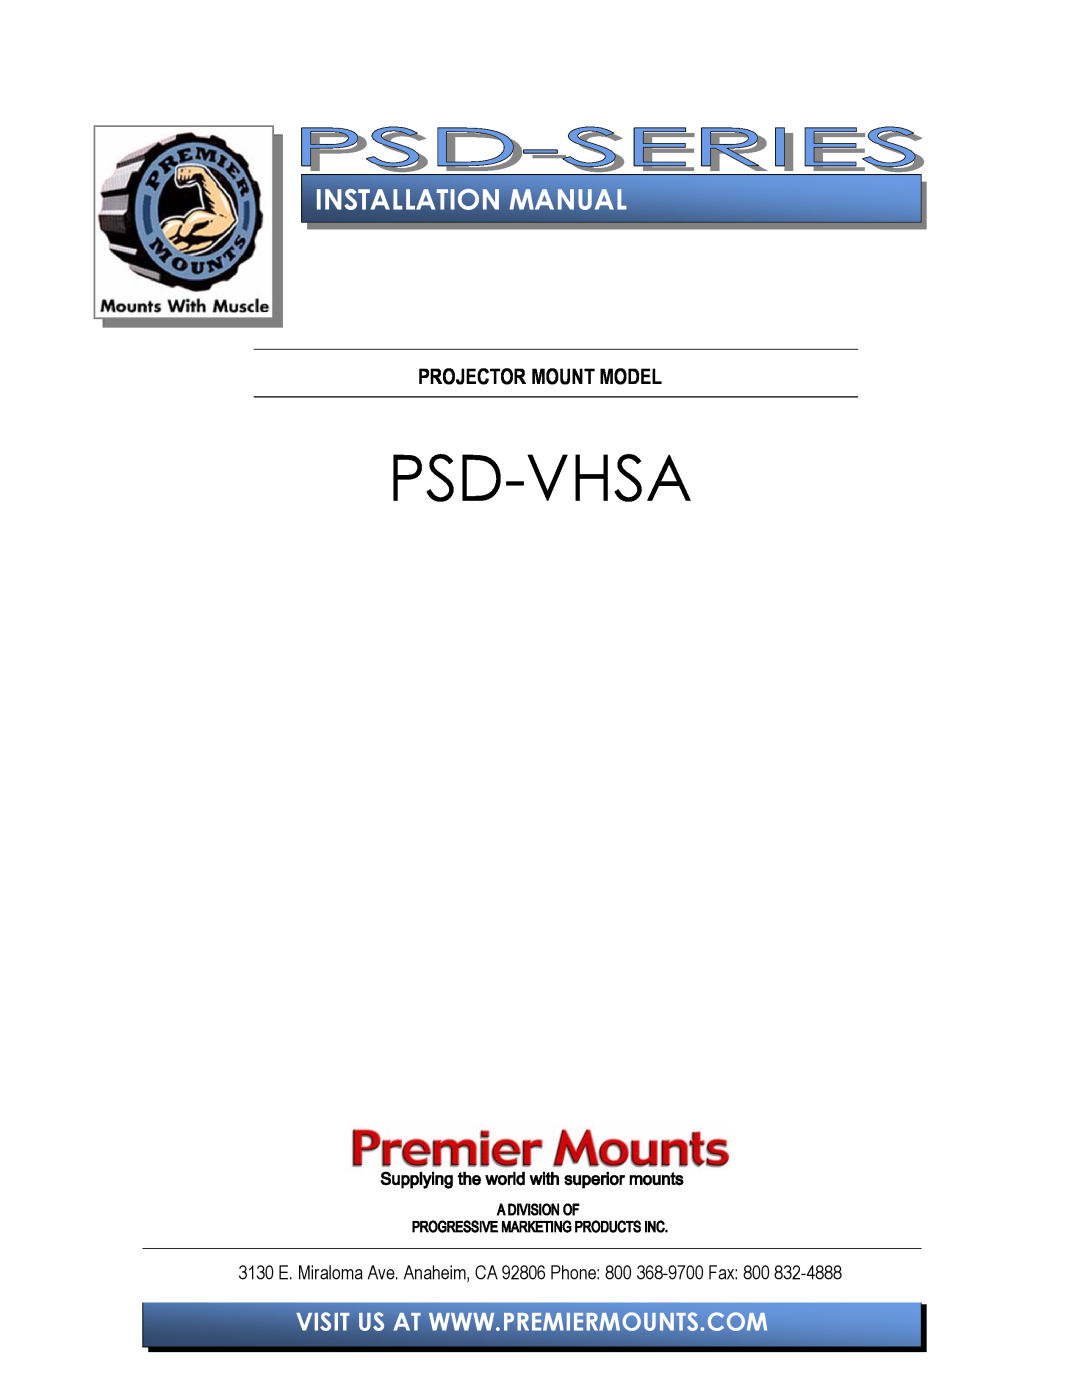 Premier Mounts PSD-VHSA installation manual Projector Mount Model, Psd-Vhsa, Installation Manual 